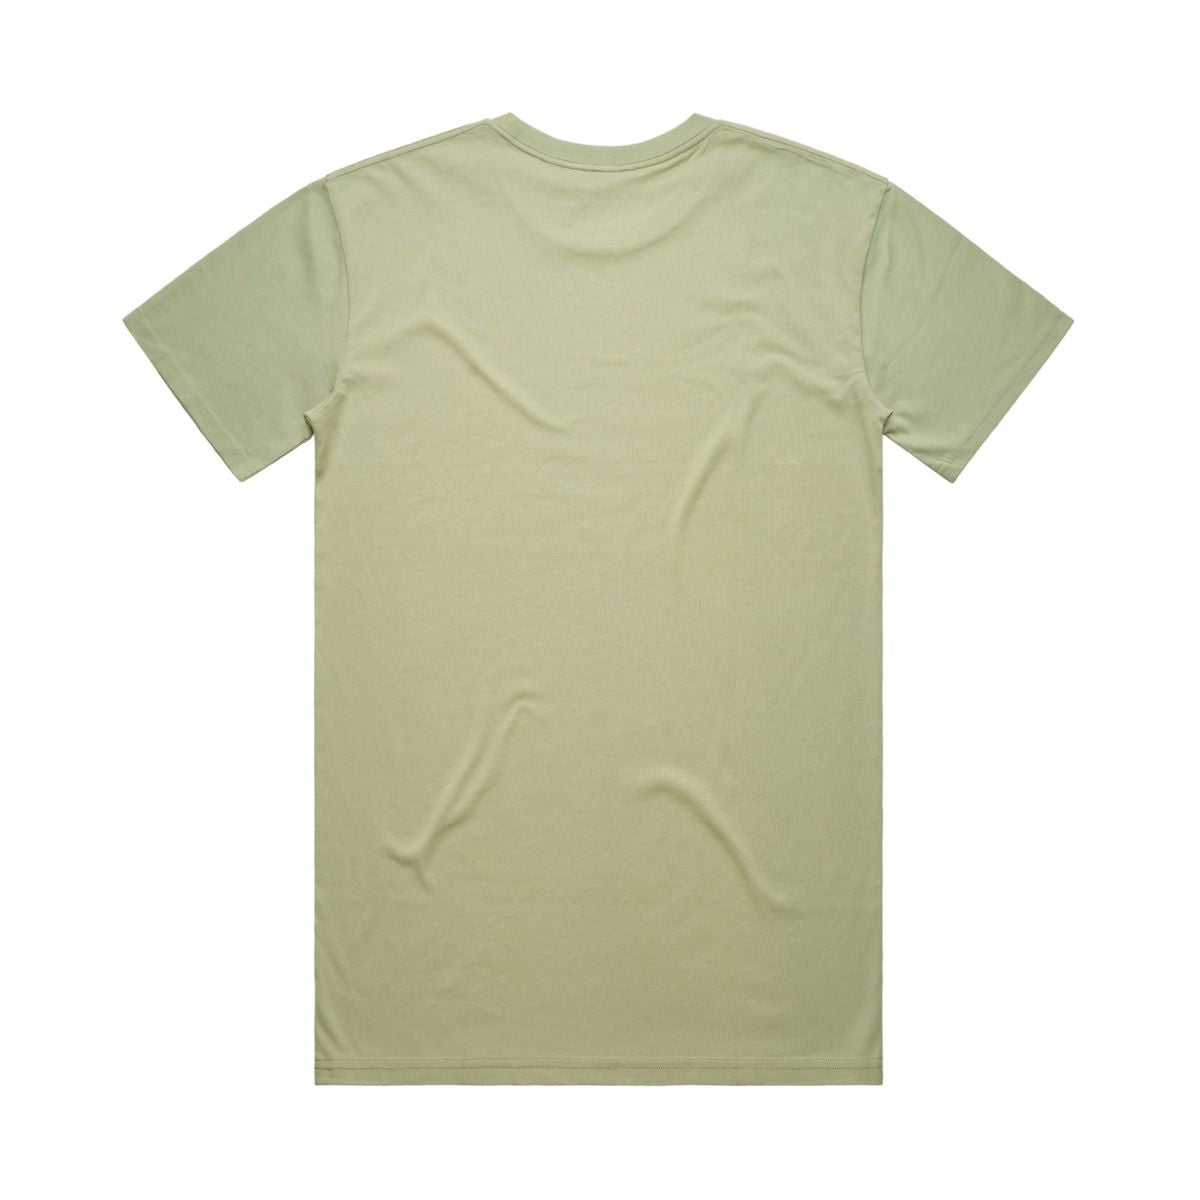 ascolour Men's Staple Tee - Green Shades 5001